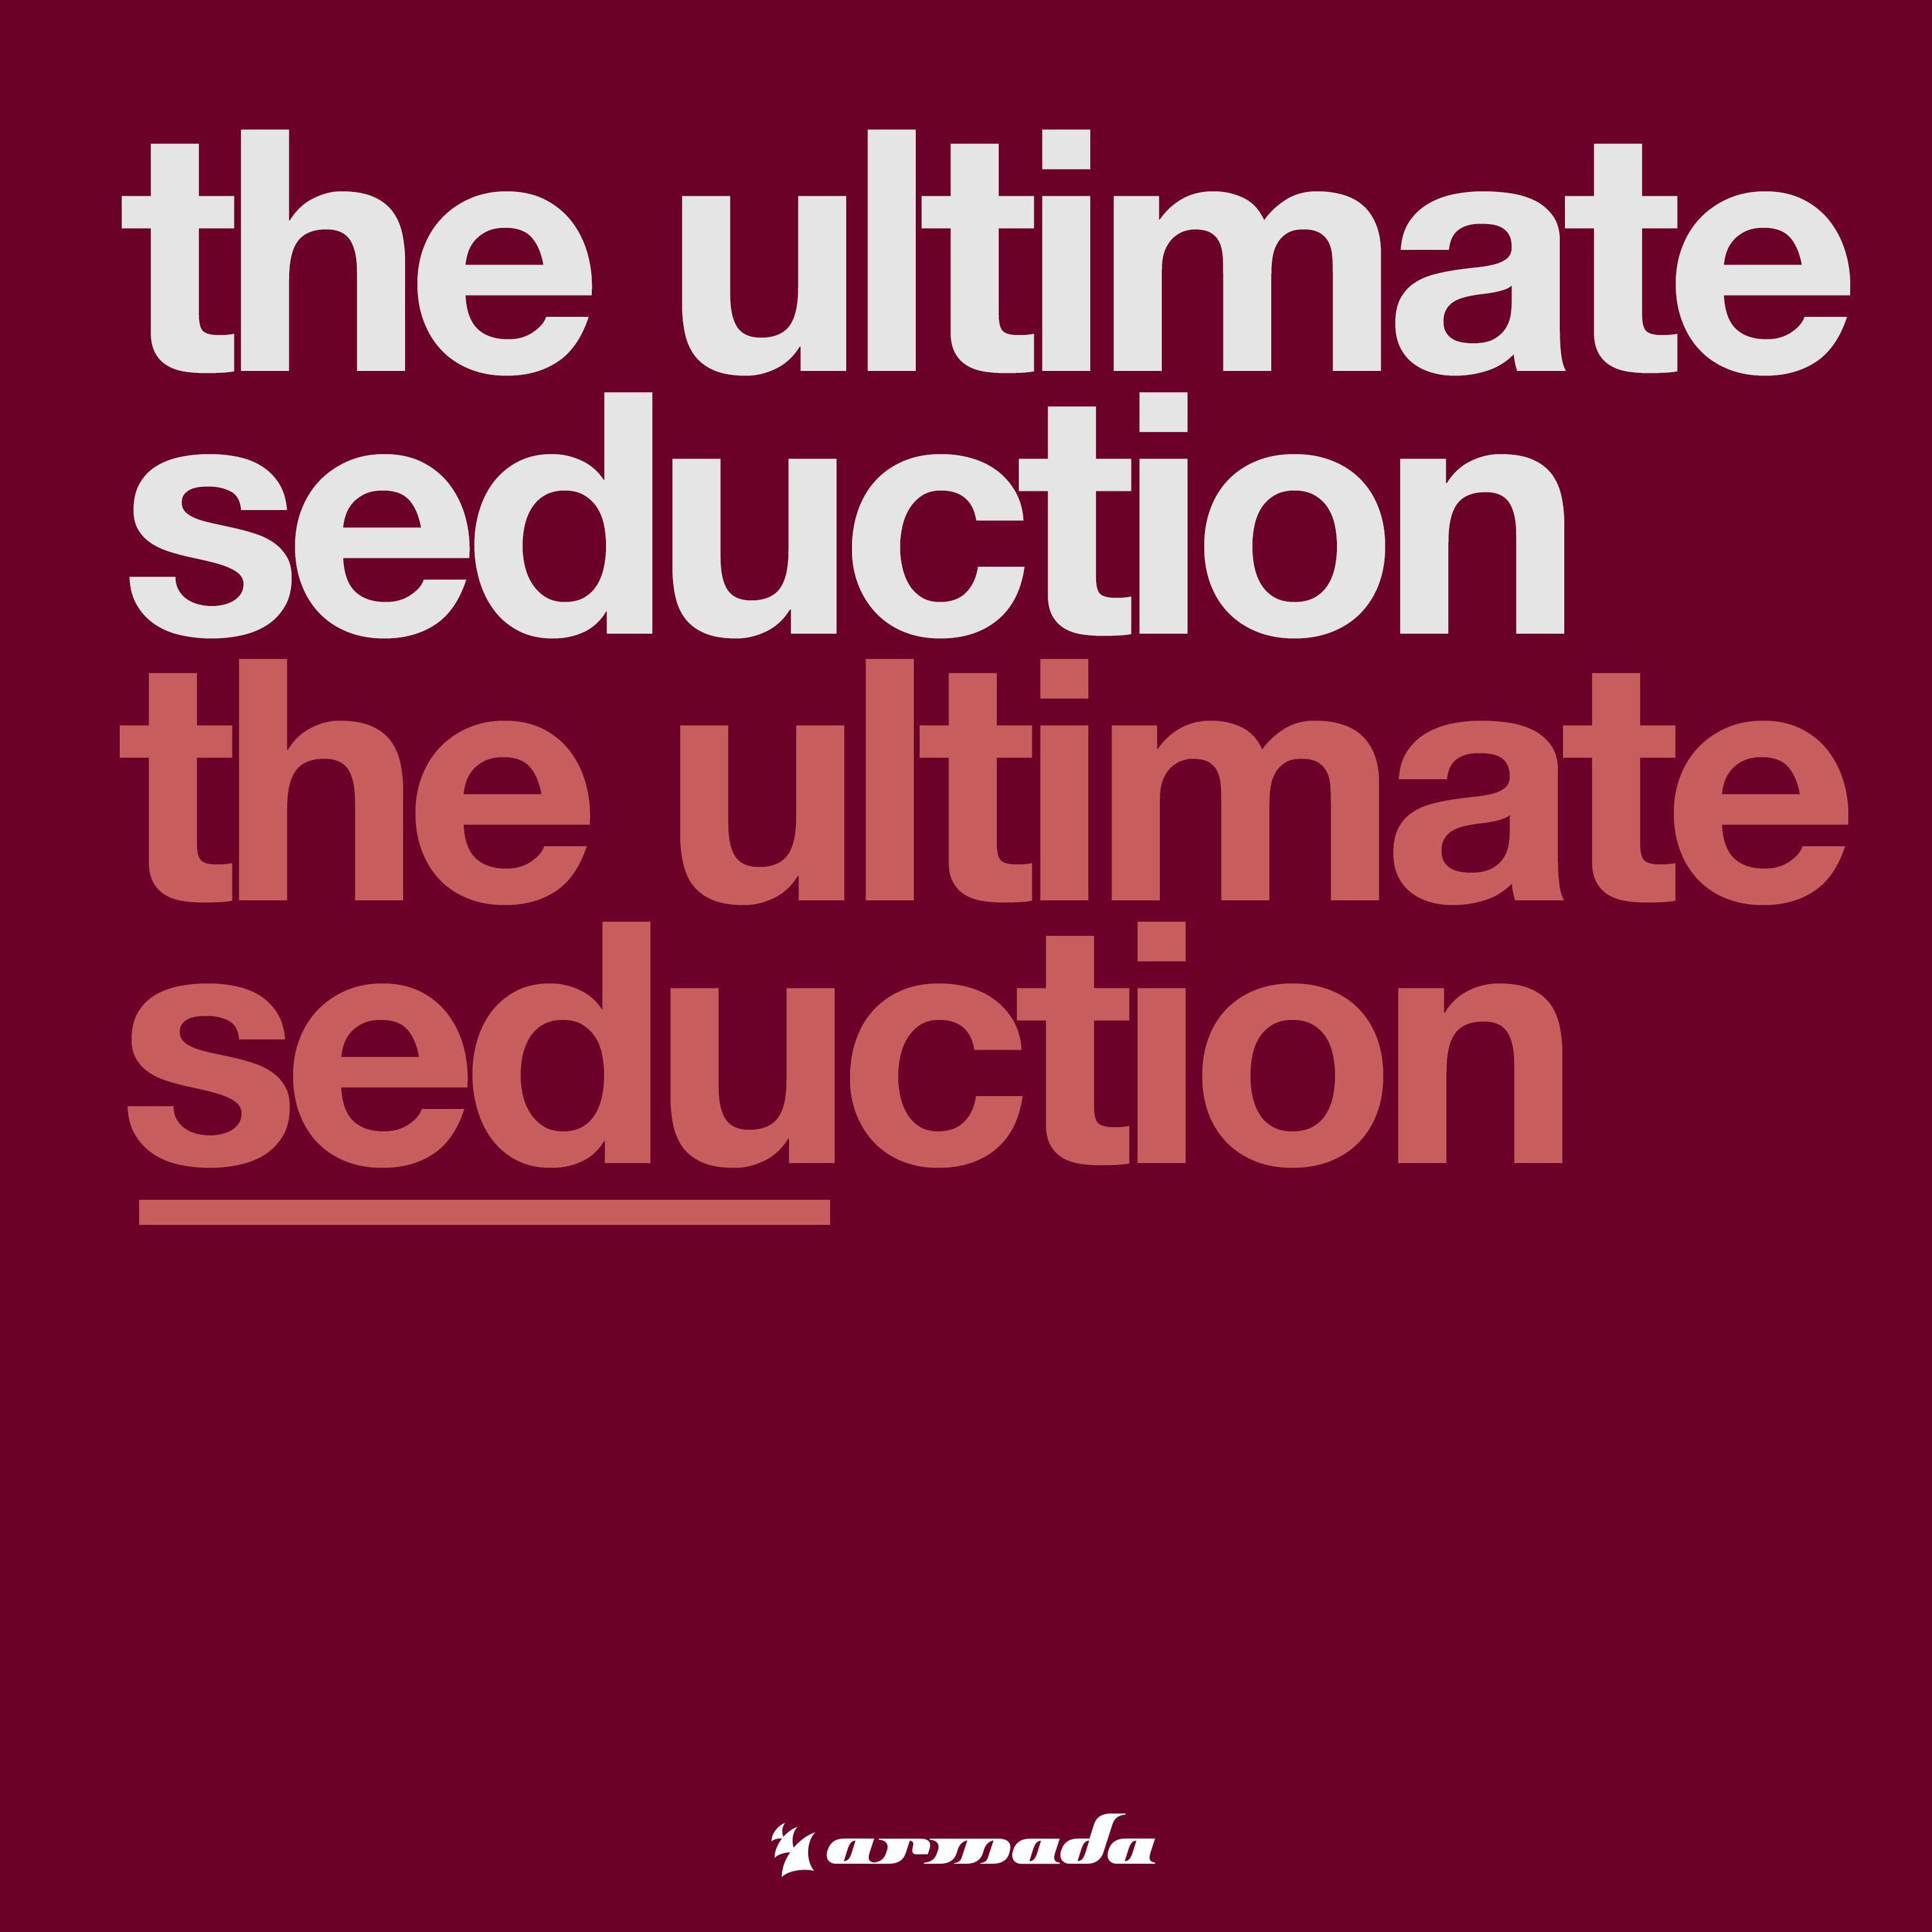 The Ultimate Seduction (Mischa Daniels Remix)